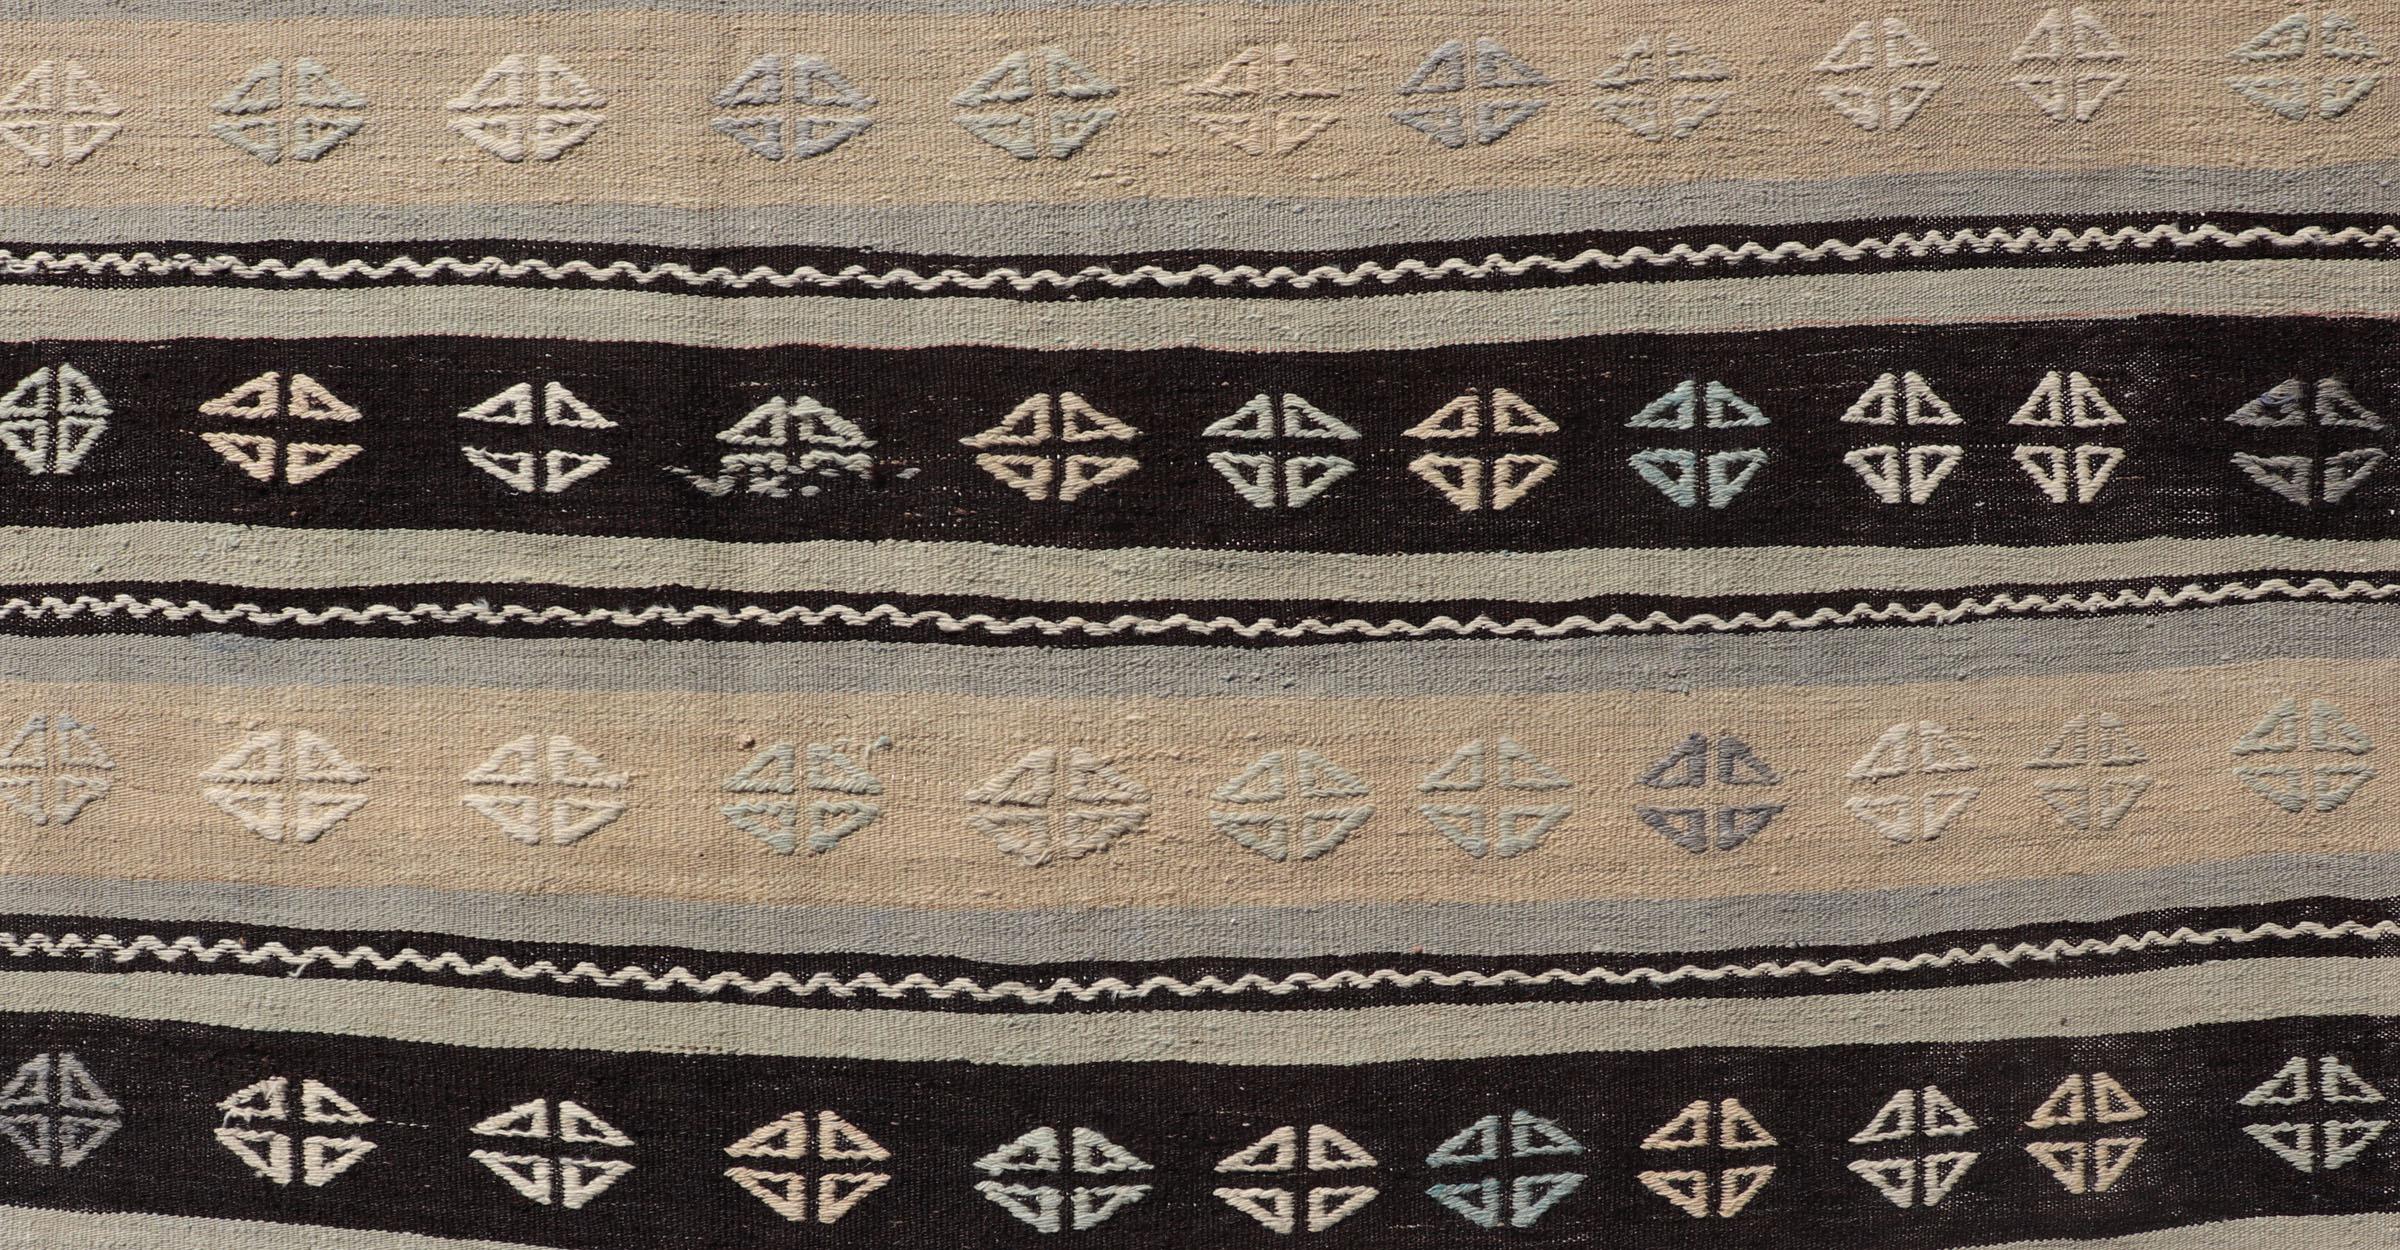 Vintage Tribal Kilim Turkish with Stripes and Tribal Motifs. Keivan Woven Arts / rug EN-P13138, country of origin / type: Turkey / Kilim, circa Mid-20th Century.

Measures: 5'2 x 9'1.